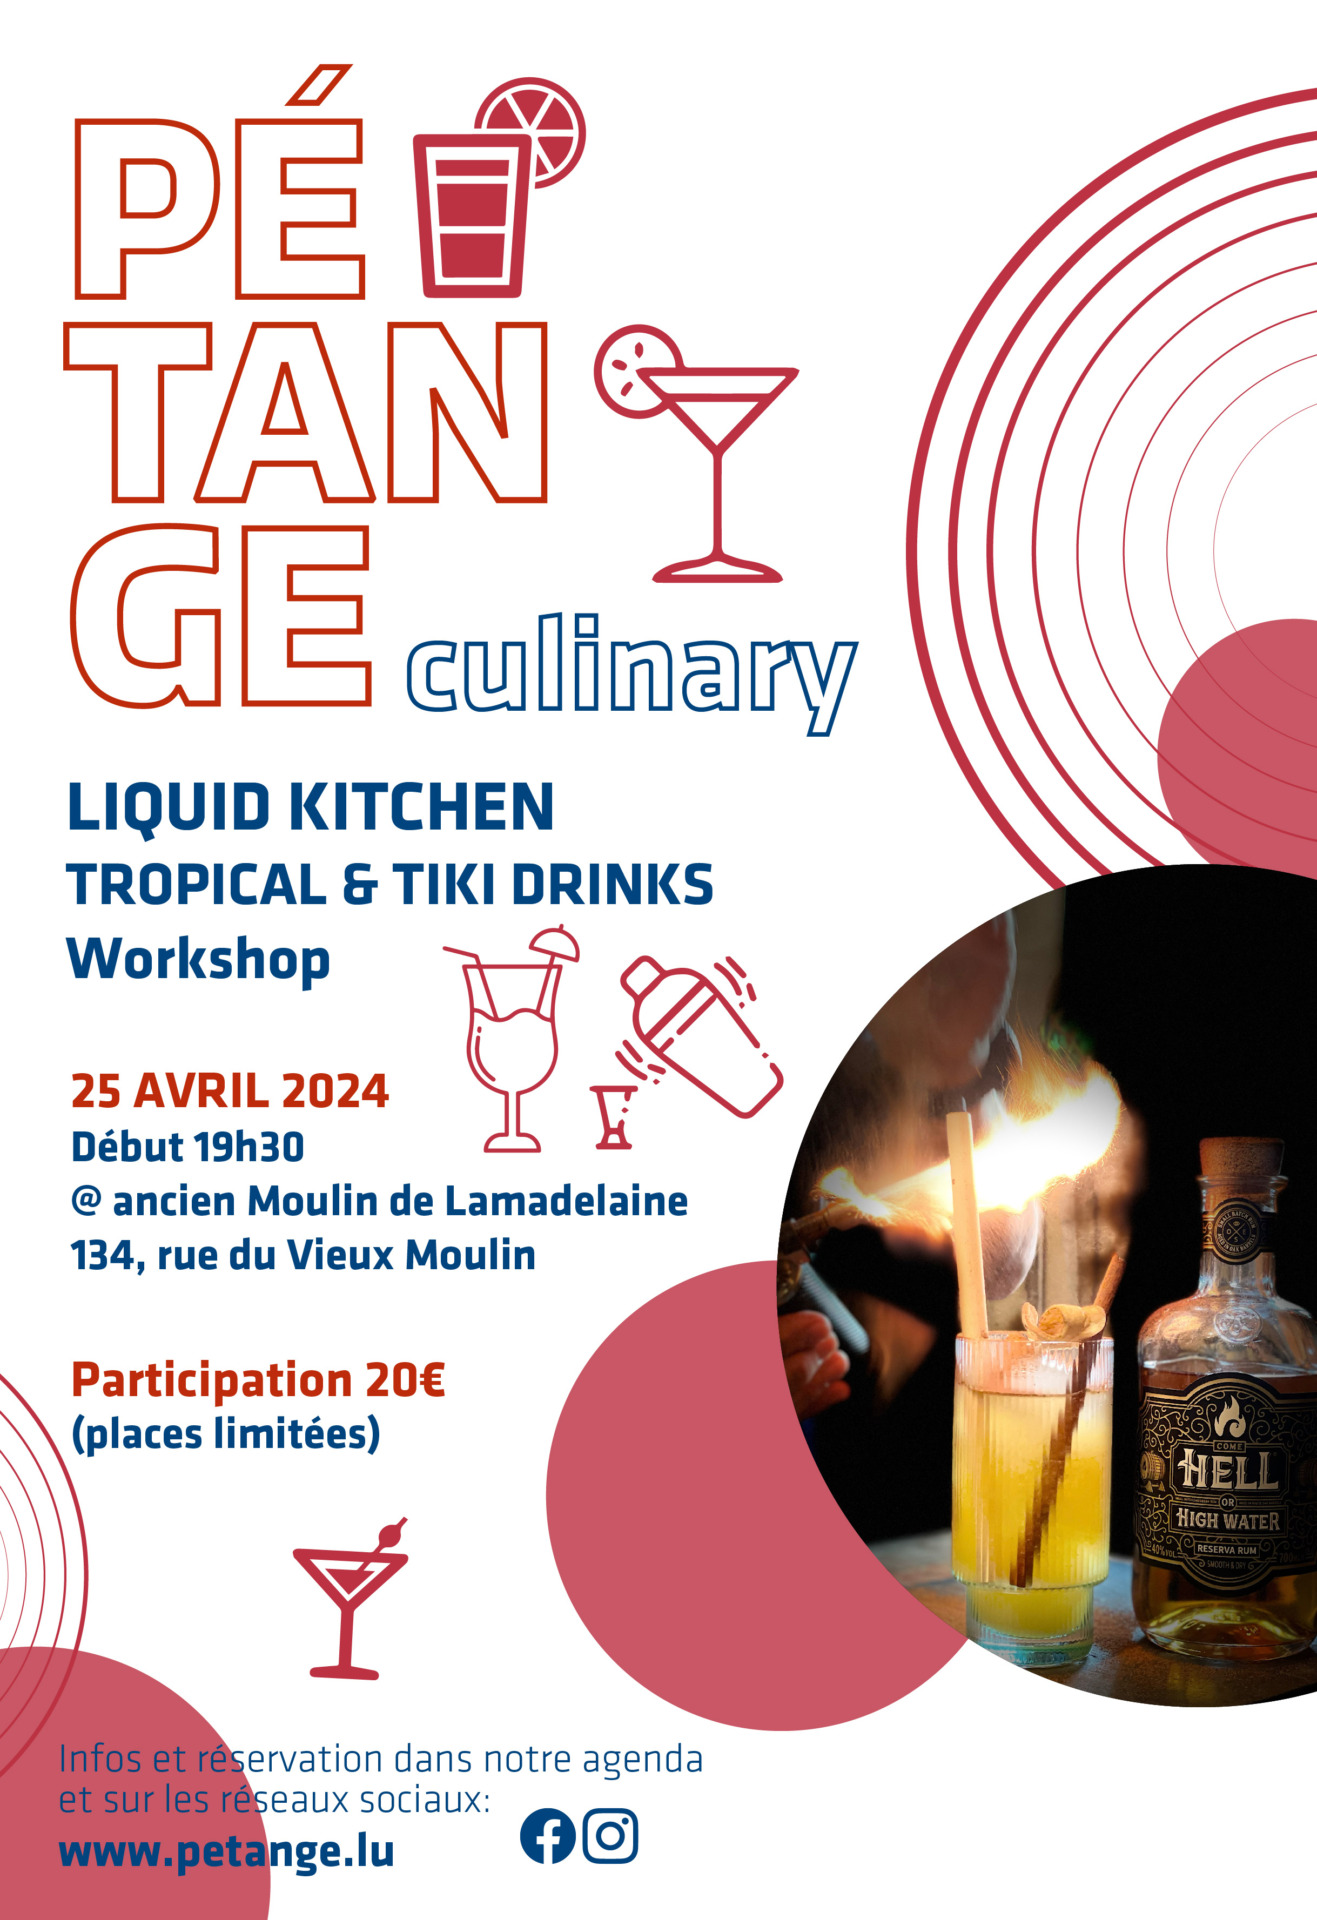 Petange Culinary & Liquid Kitchen & Tropical & Tiki drinks